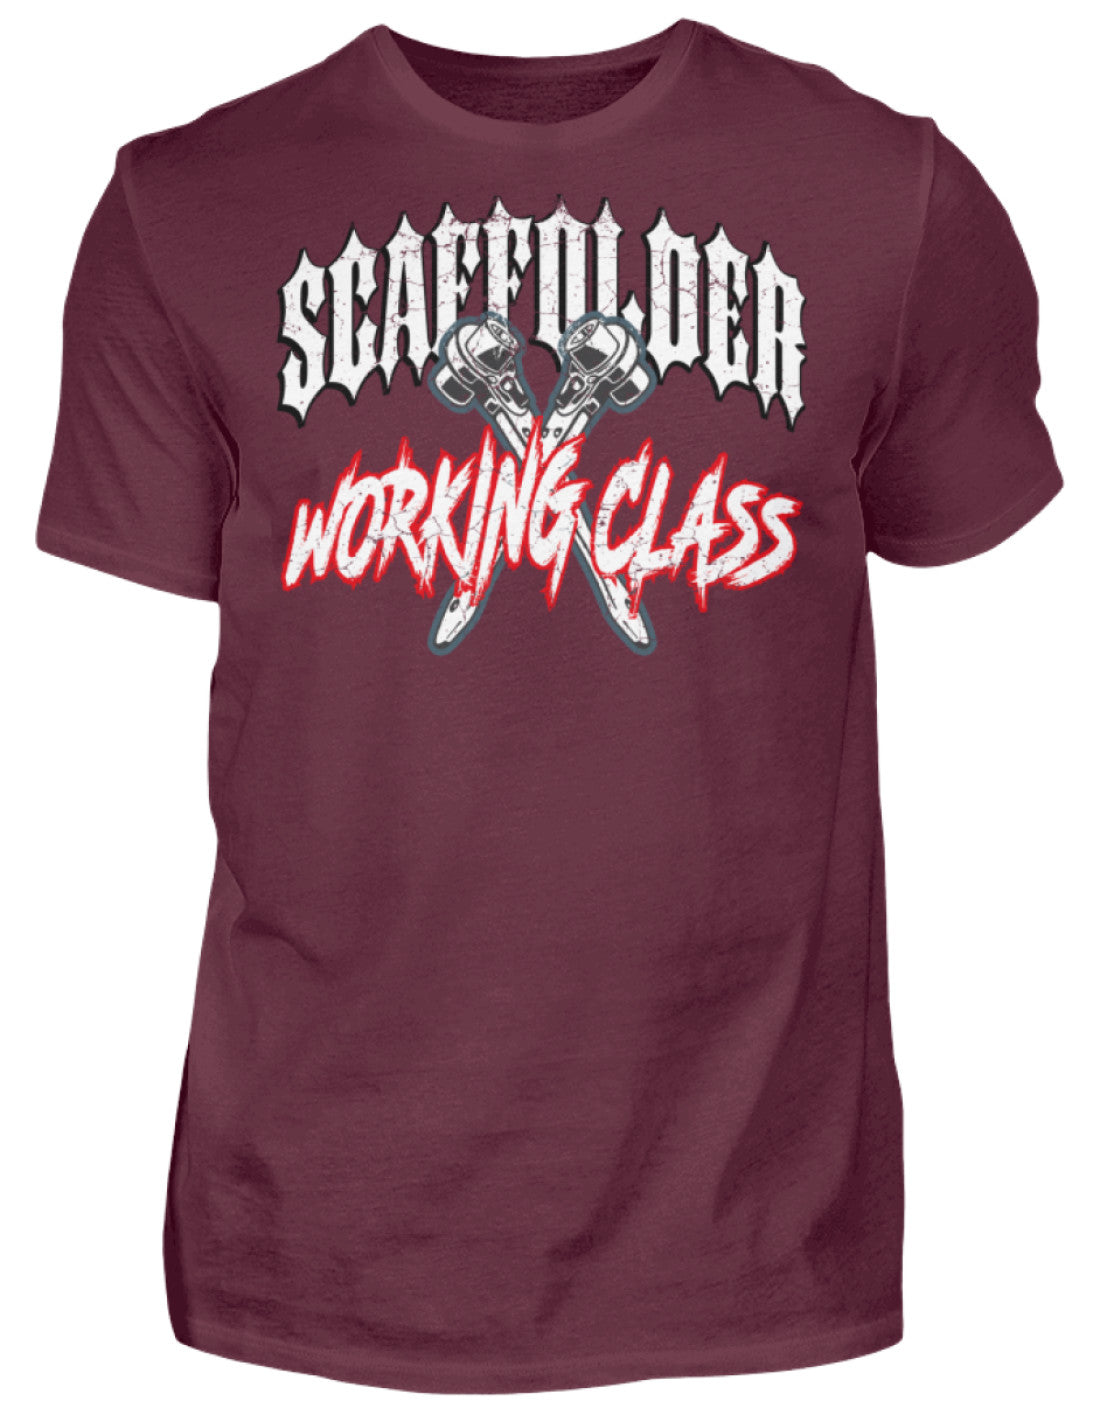 Scaffolder Working Class €22.95 Gerüstbauer - Shop >>